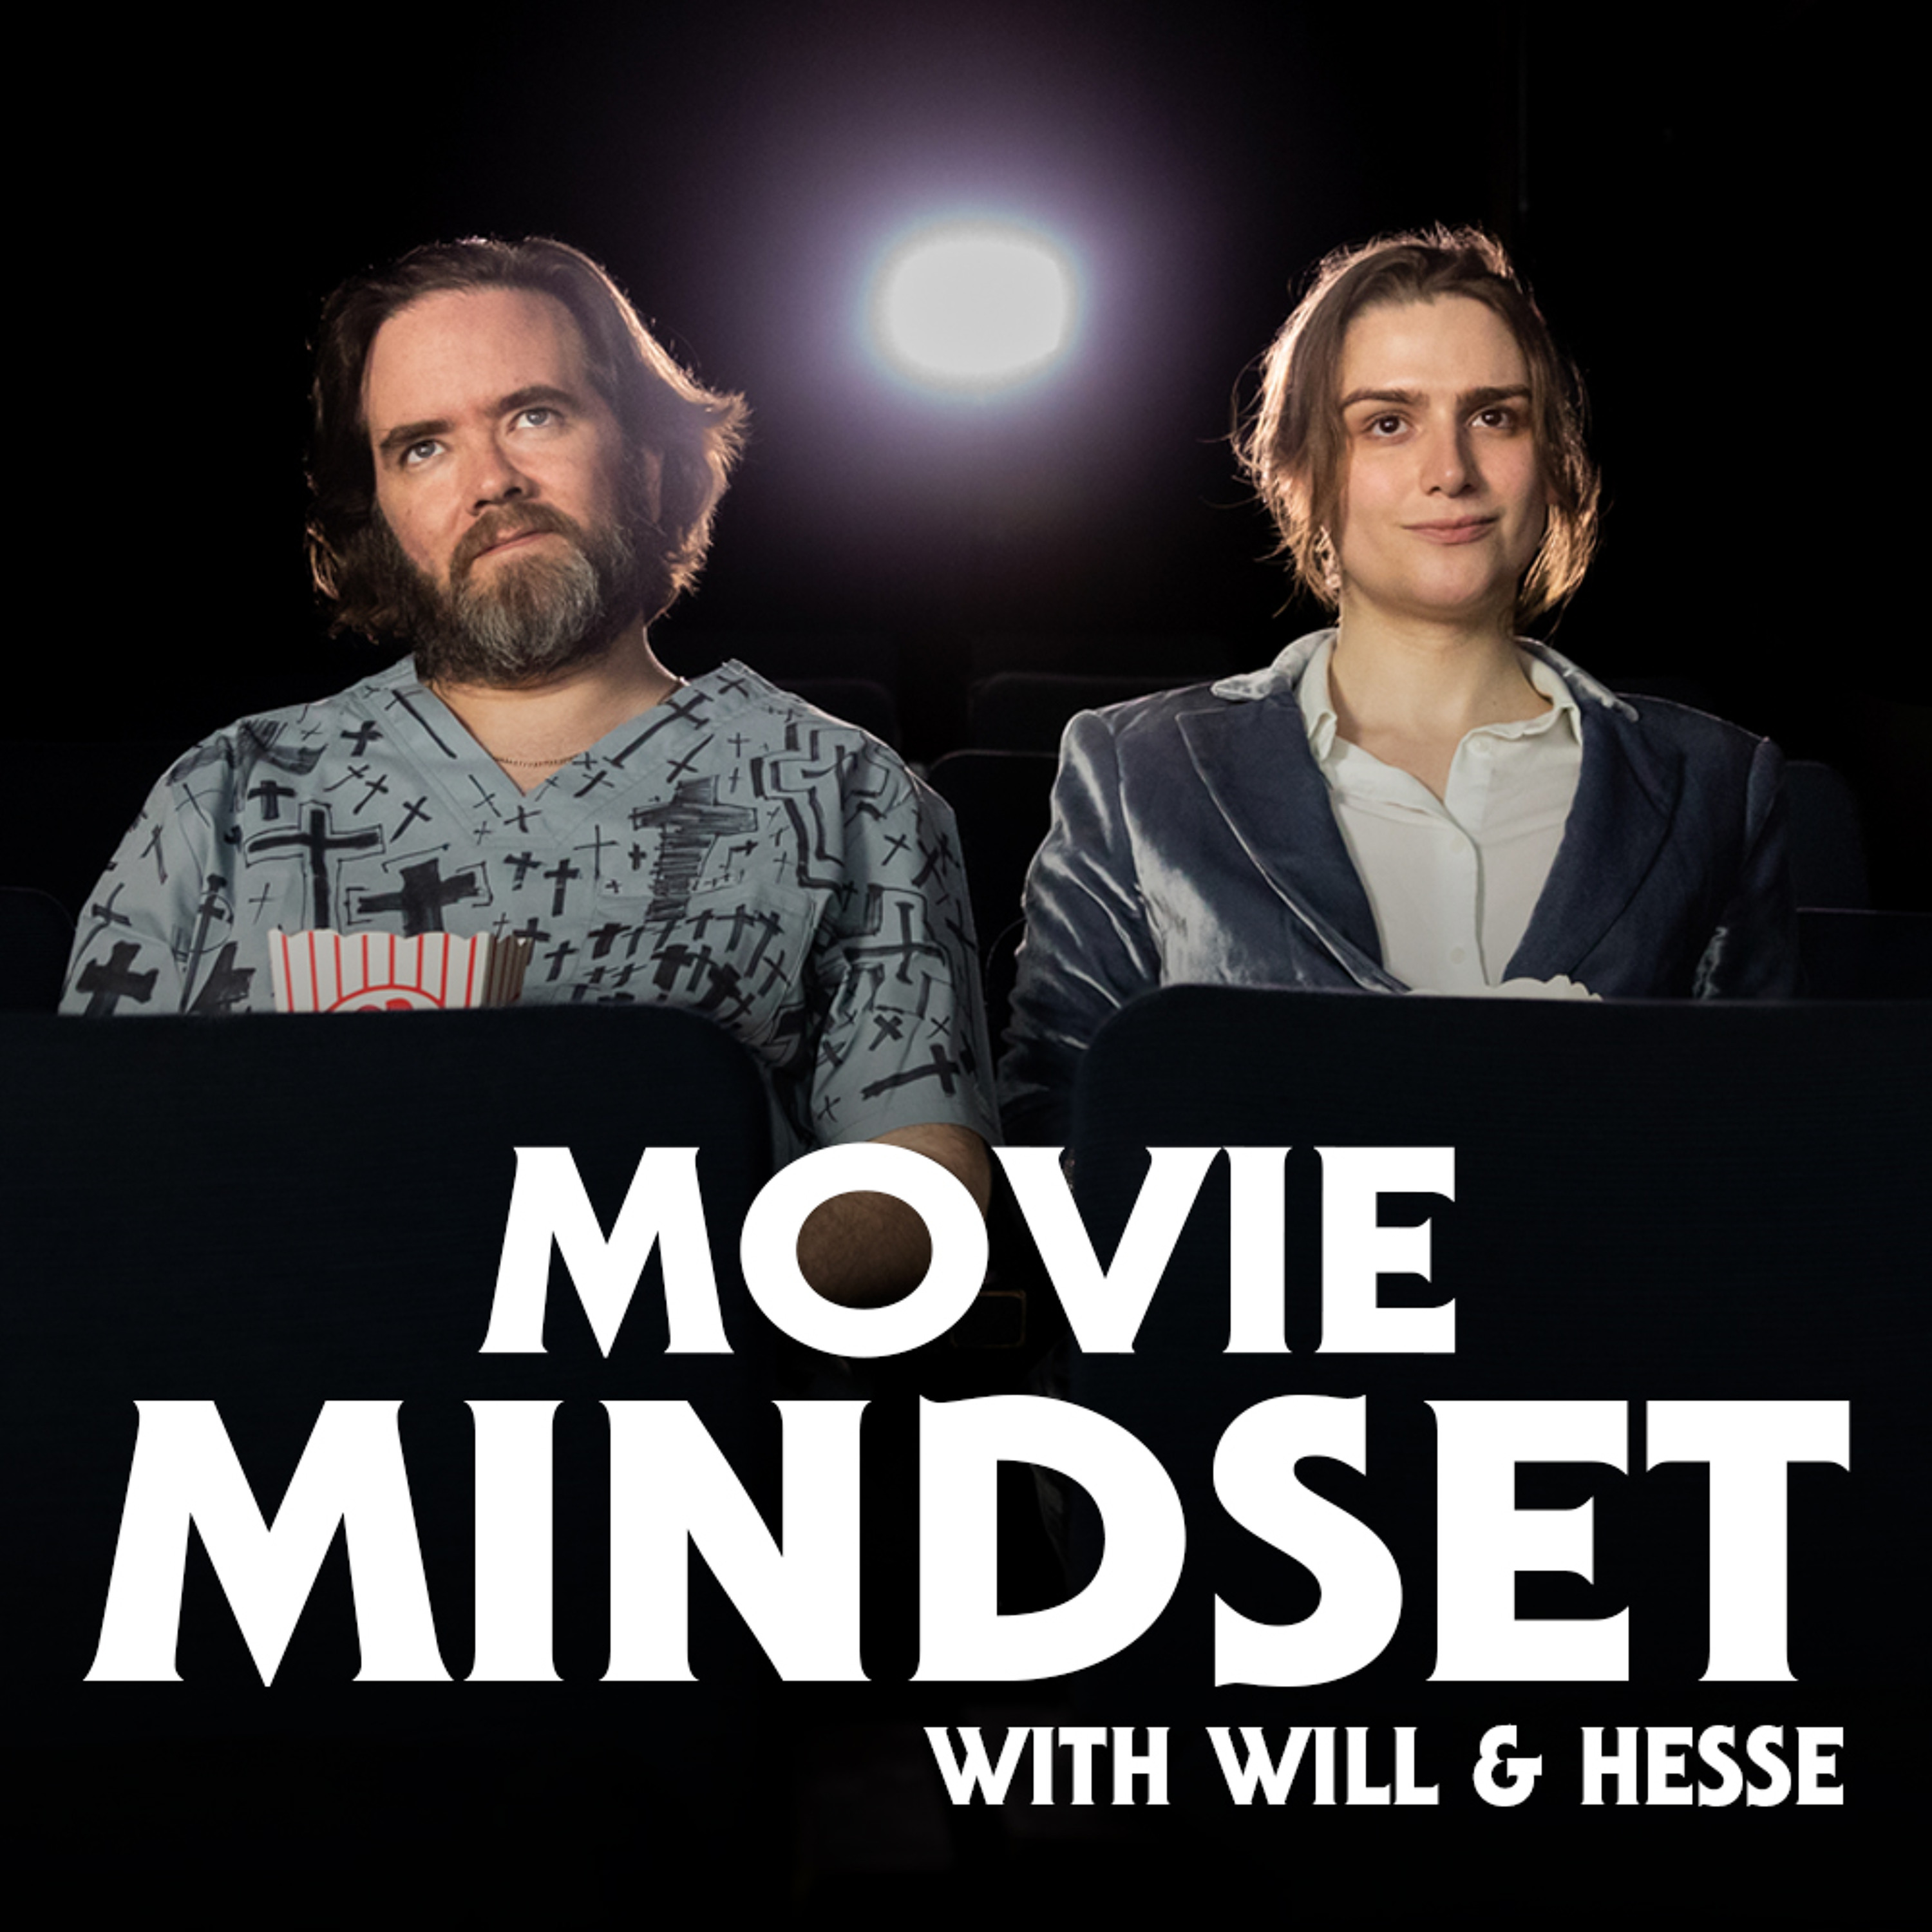 Movie Mindset 06 Teaser - Clint Eastwood’s Sudden Impact